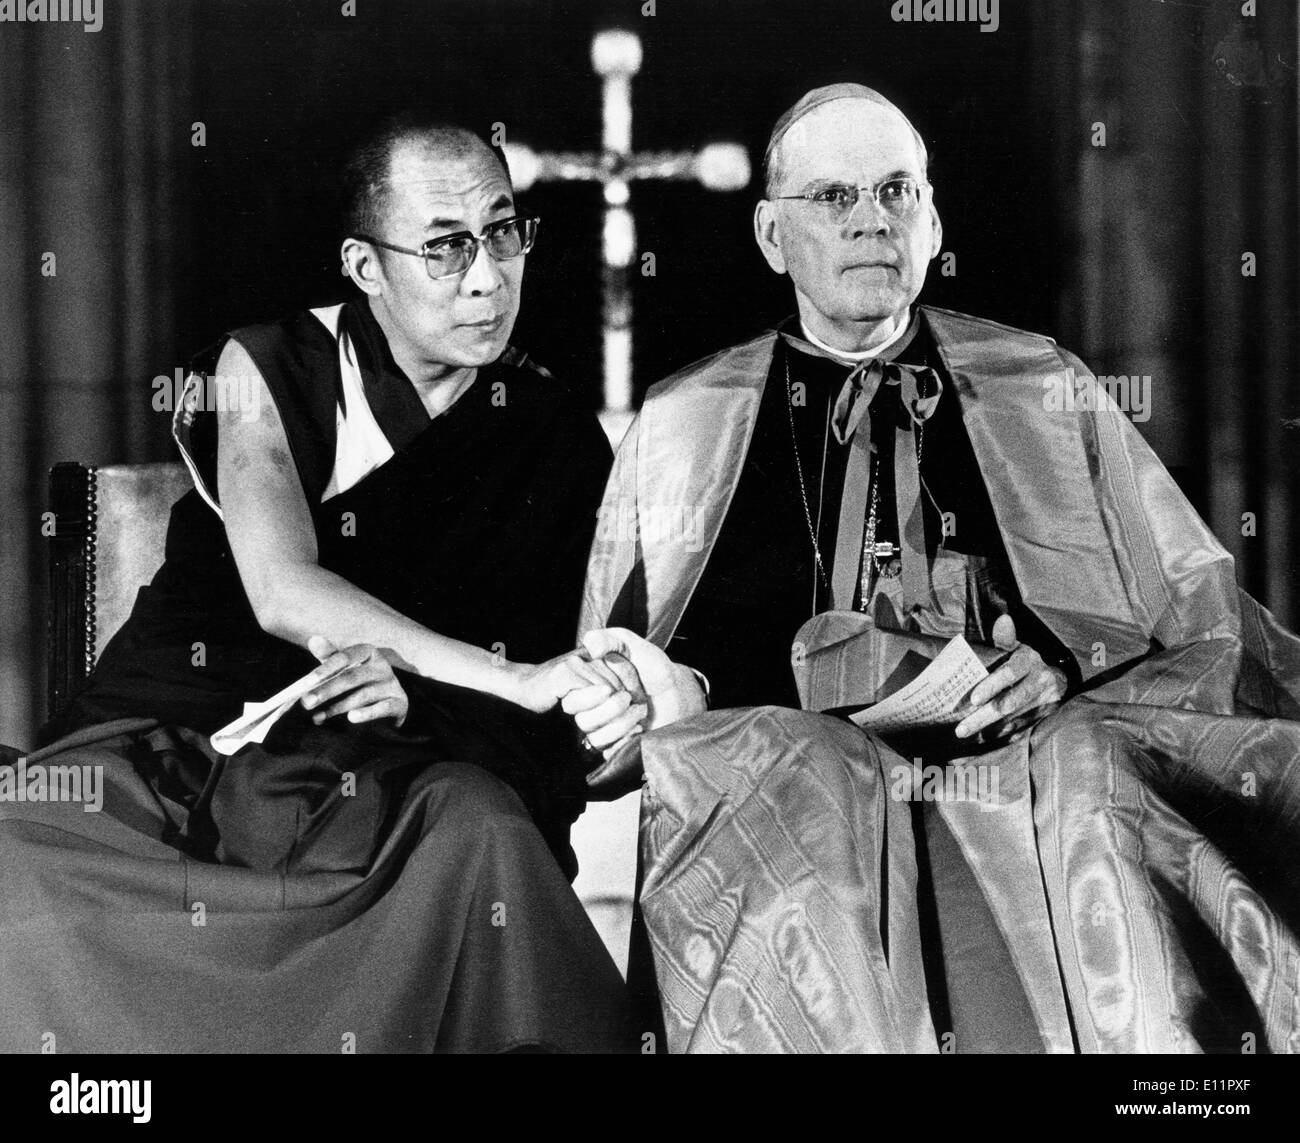 Tibetan spiritual leader 14th DALAI LAMA and priest CLARENCE CARDINAL COOKE Stock Photo